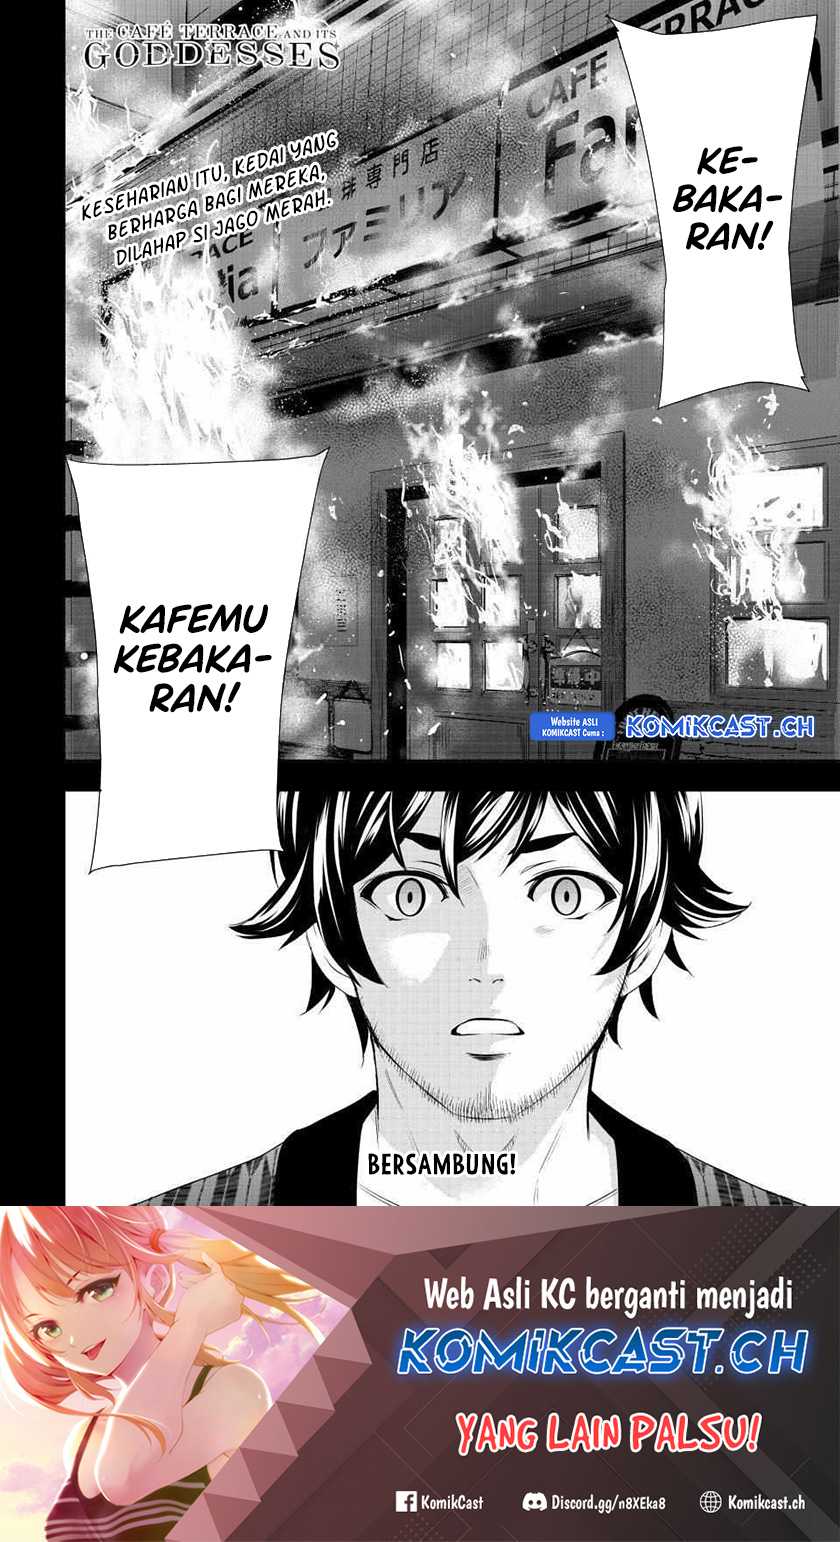 Megami no Kafeterasu (Goddess Café Terrace) Chapter 122